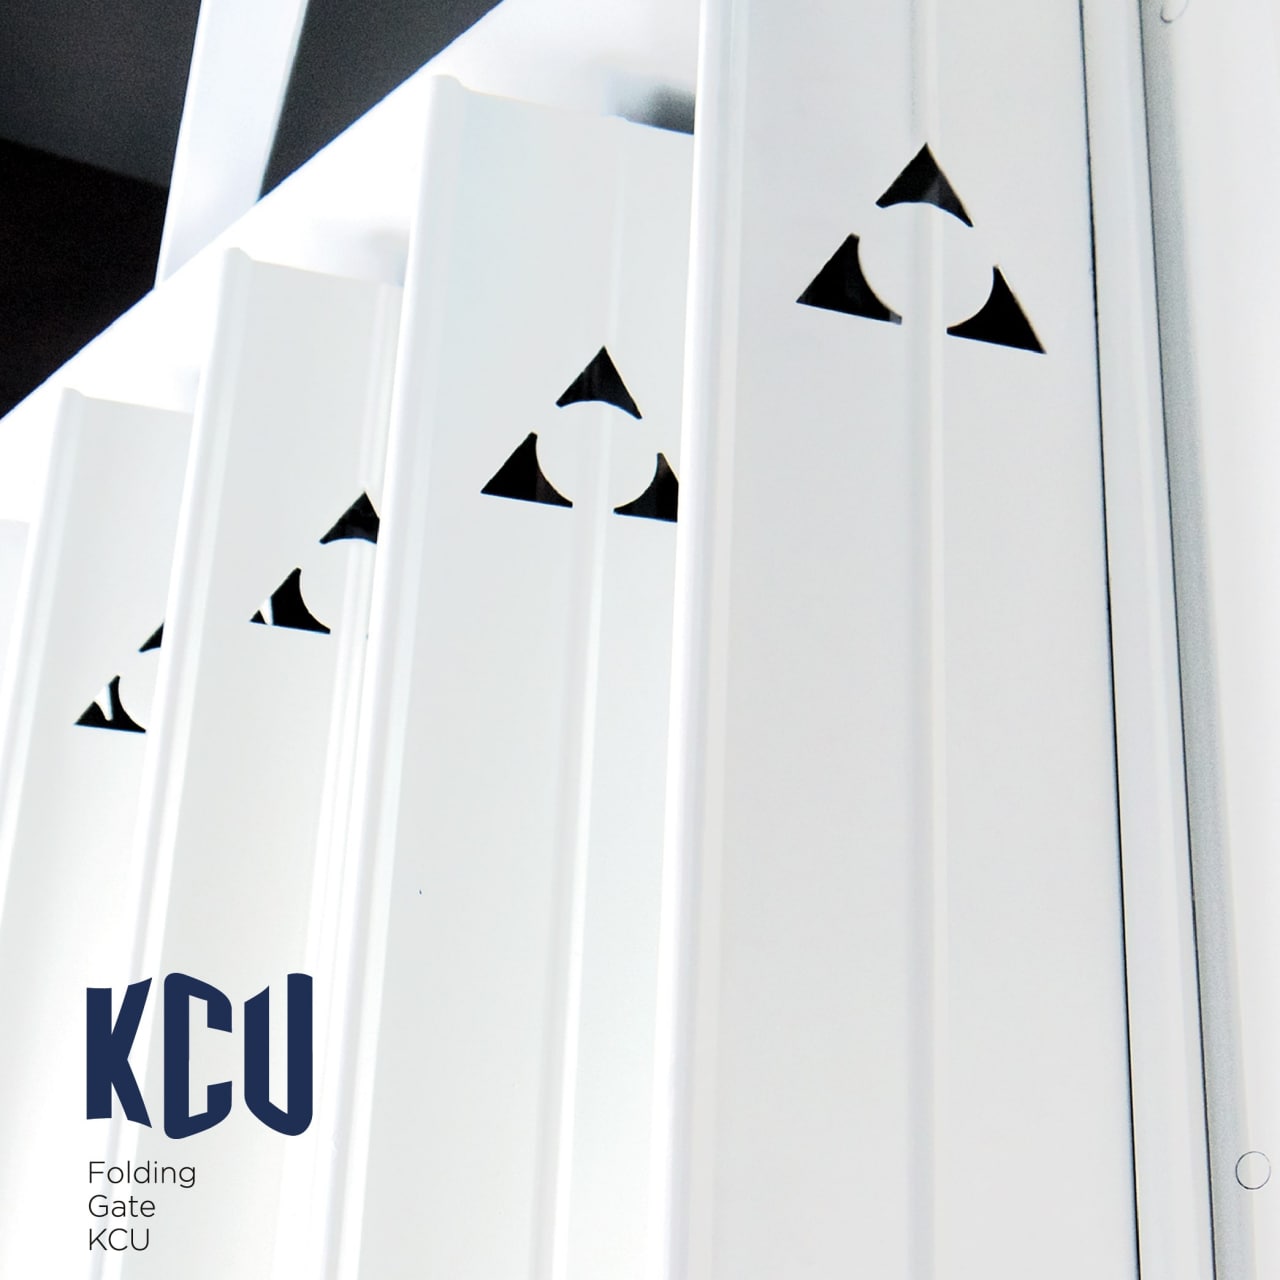 Folding Gate KCU